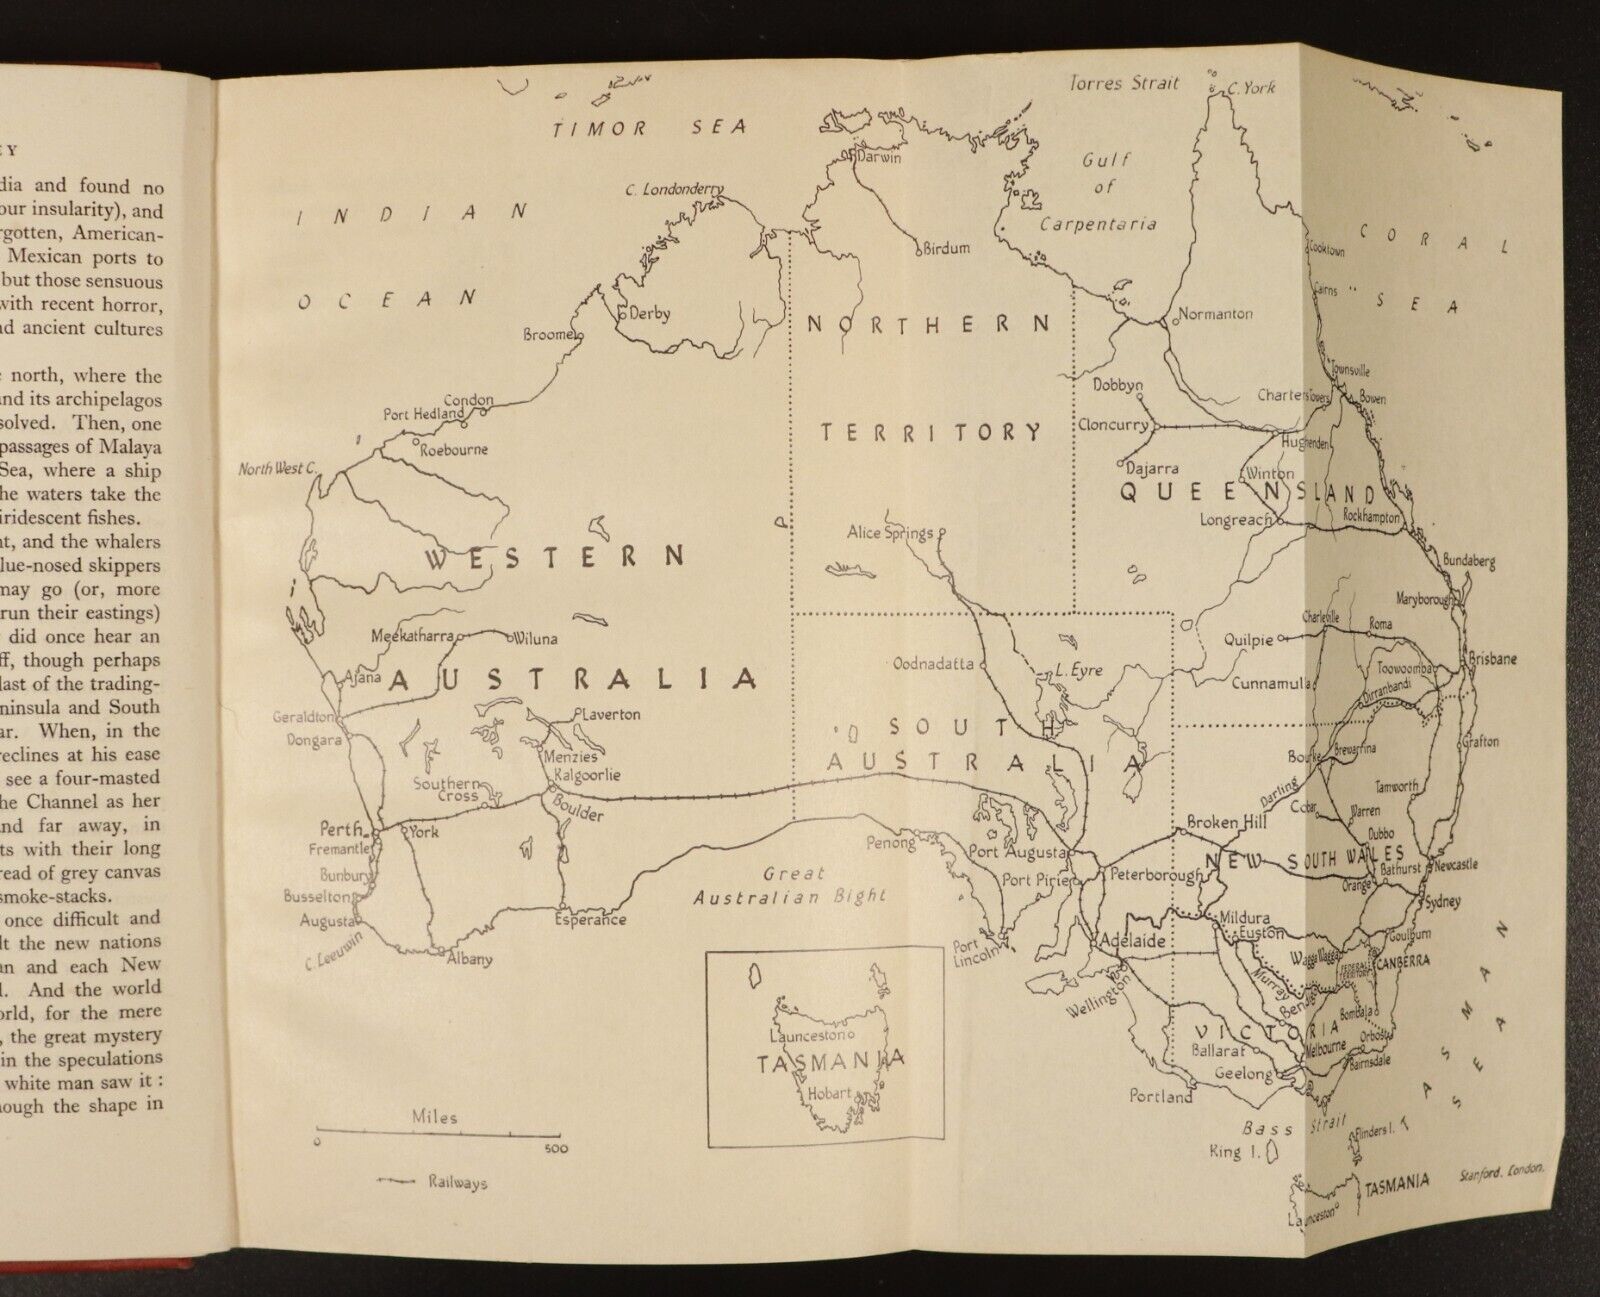 1939 Australian Journey by Paul McGuire Antique Australian History Book w/Map